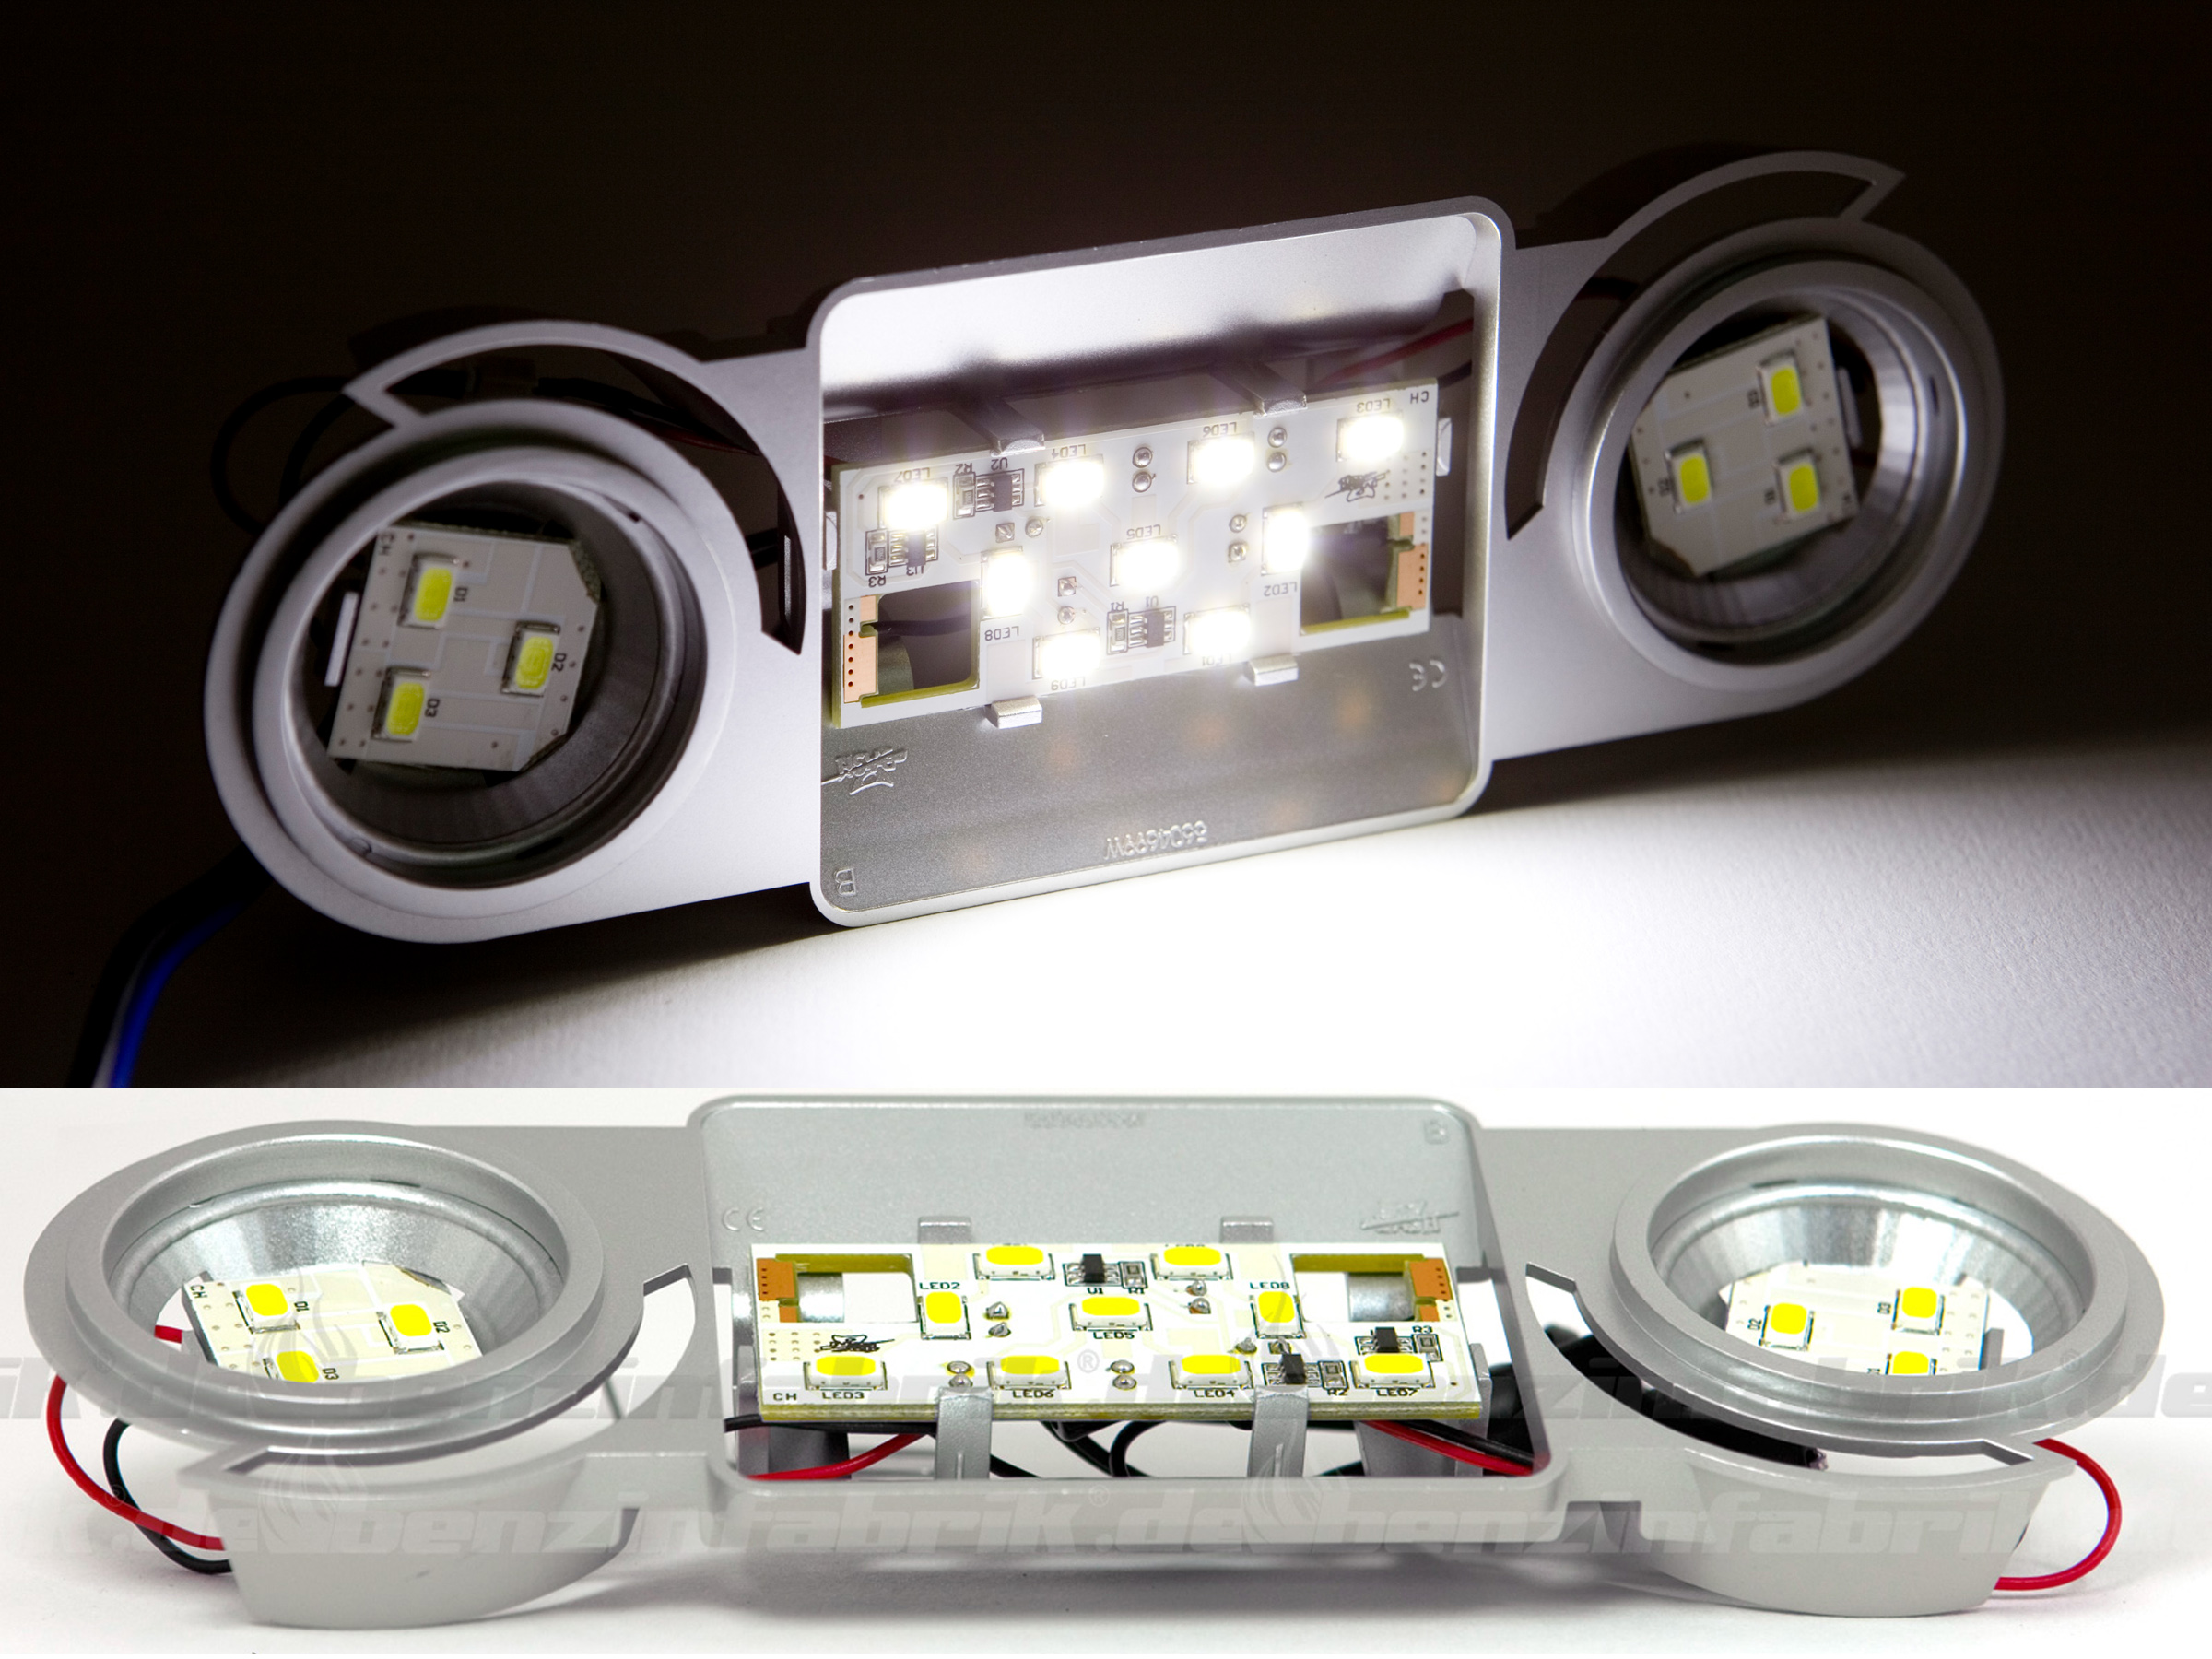 OEM SMD LED Innenraumbeleuchtung VW, Dachhimmel hinten, kaltweiss 6000K, LED Dachhimmelbeleuchtung, LED Module, Auto Innenraumlicht, LED Auto  Innenraumbeleuchtung